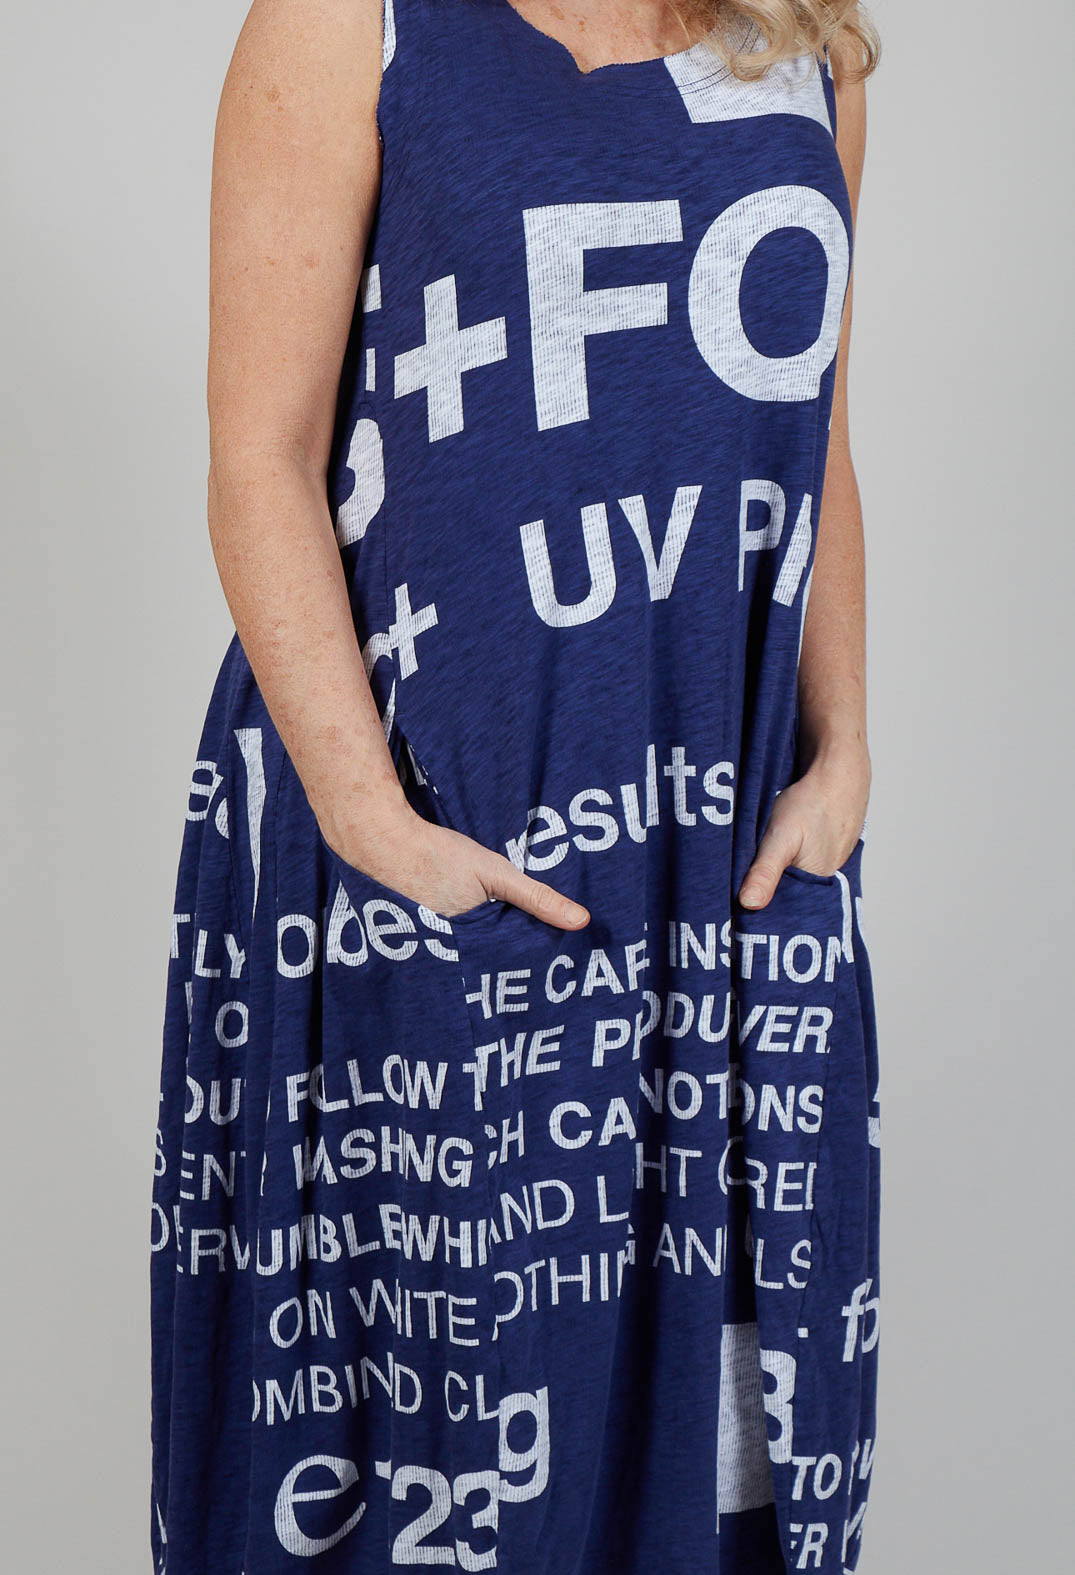 Tulip Hem Sleeveless Dress in Azur Print